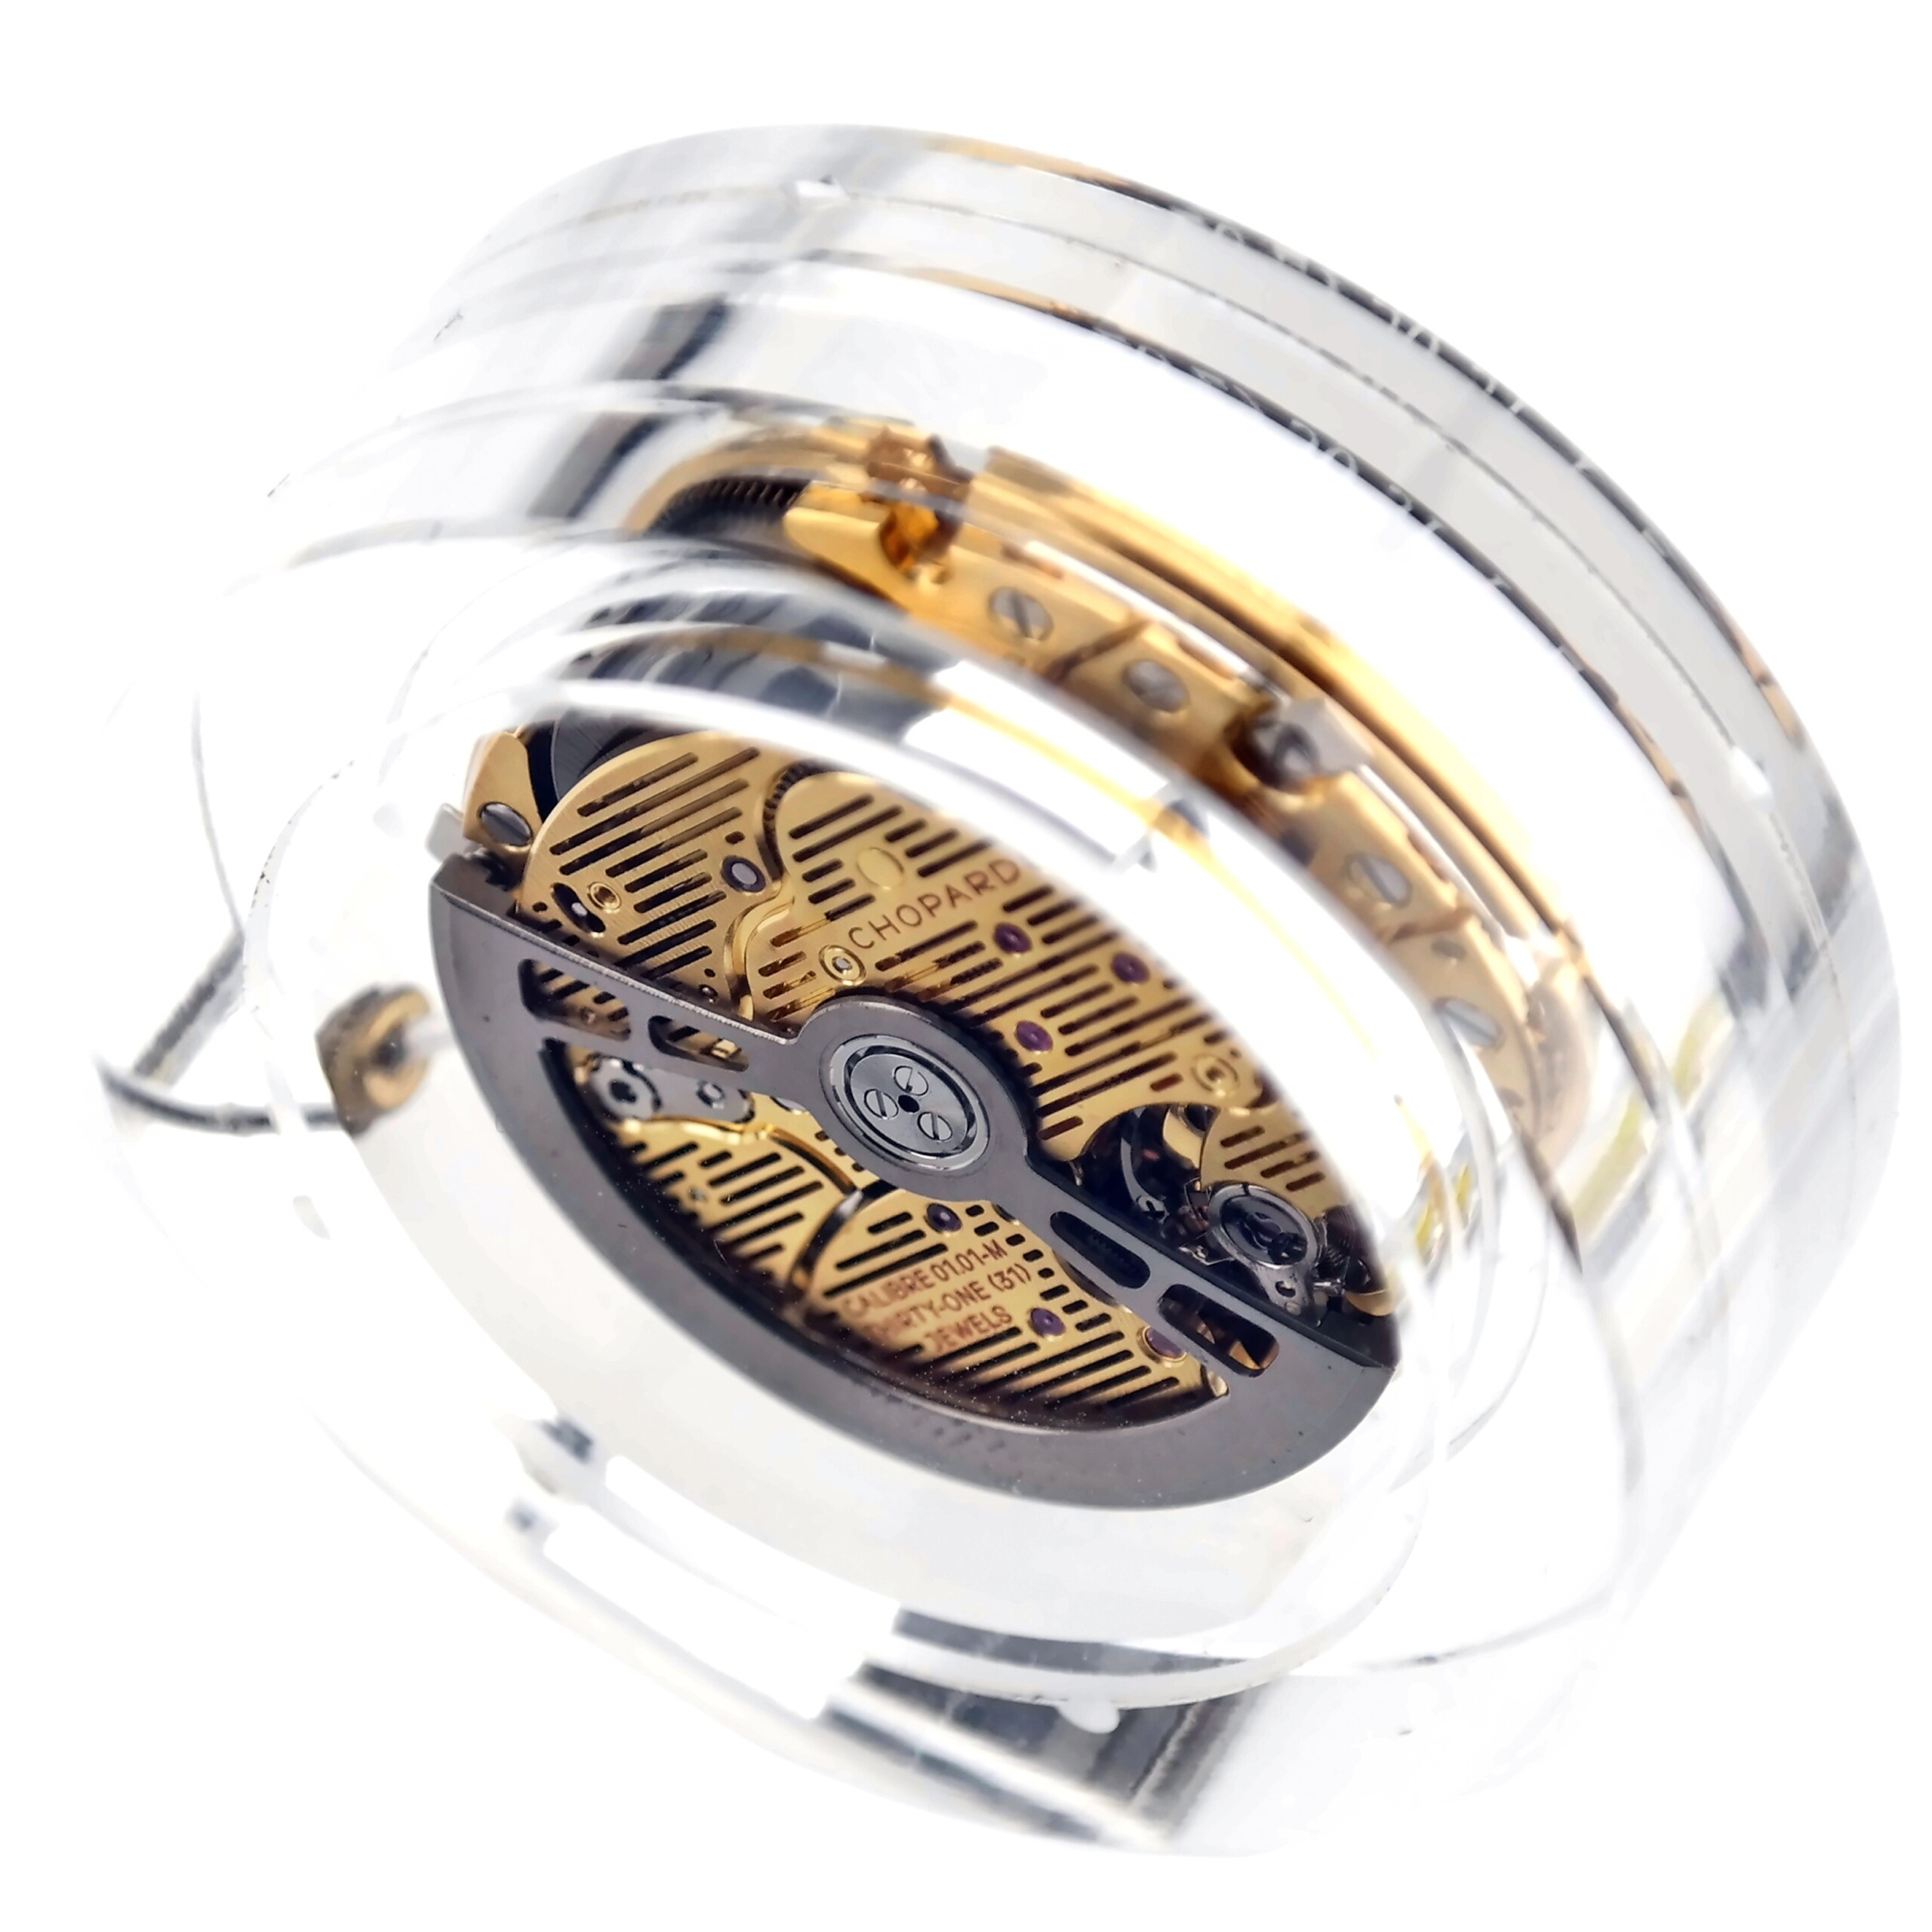 chopard automatic chronometer calibre 01.01 m watch movement